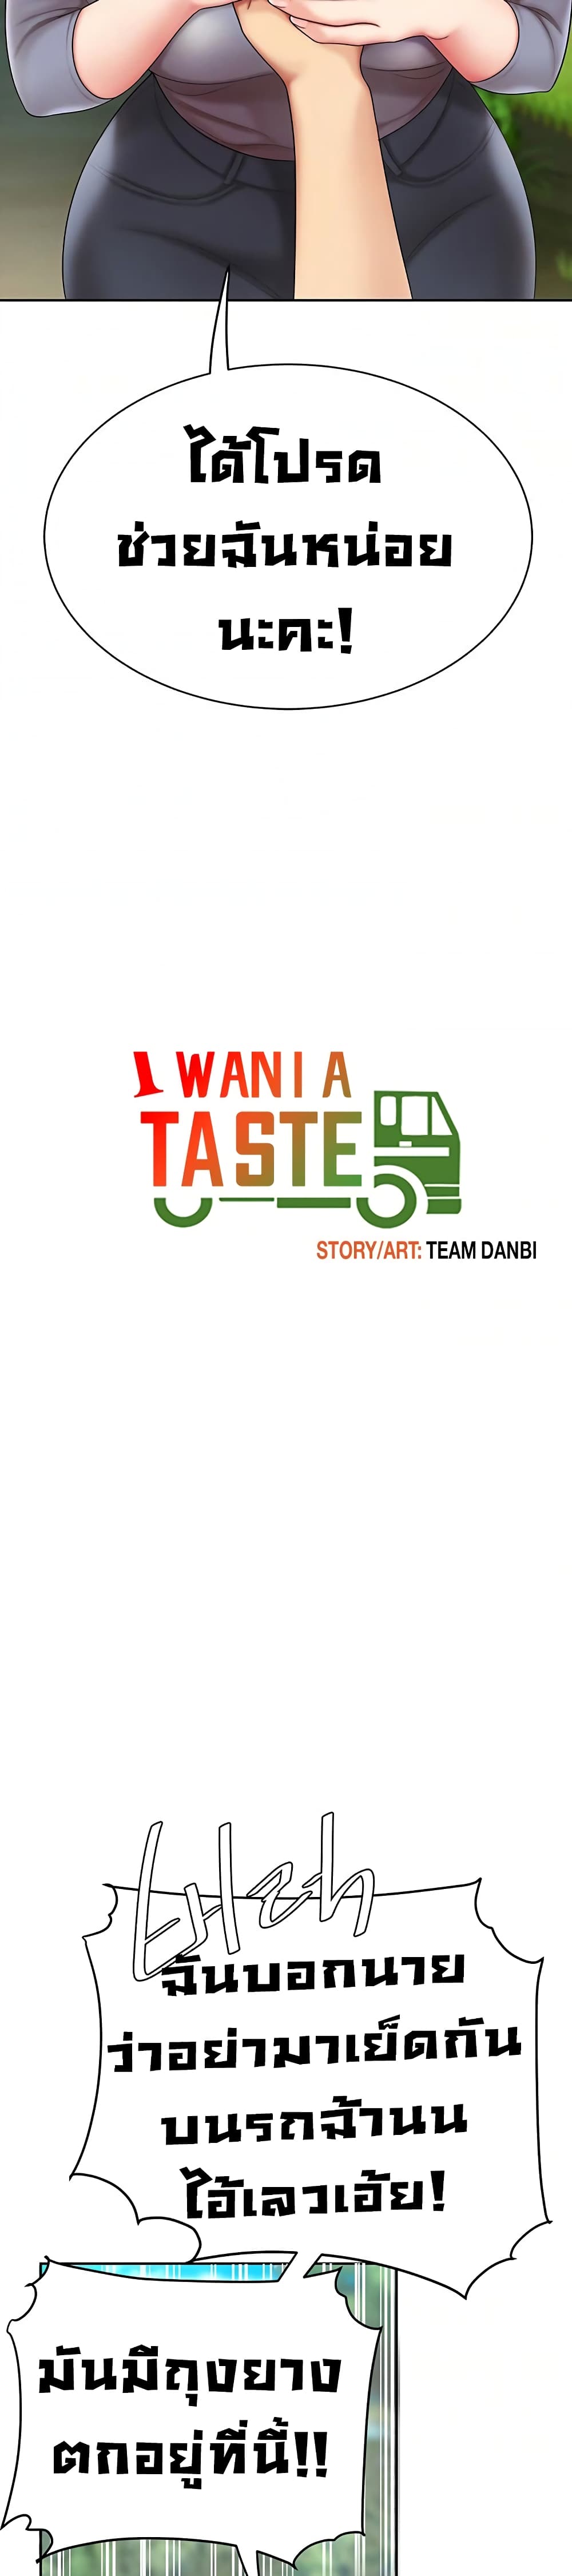 I-Want-A-Taste-6-4.jpg